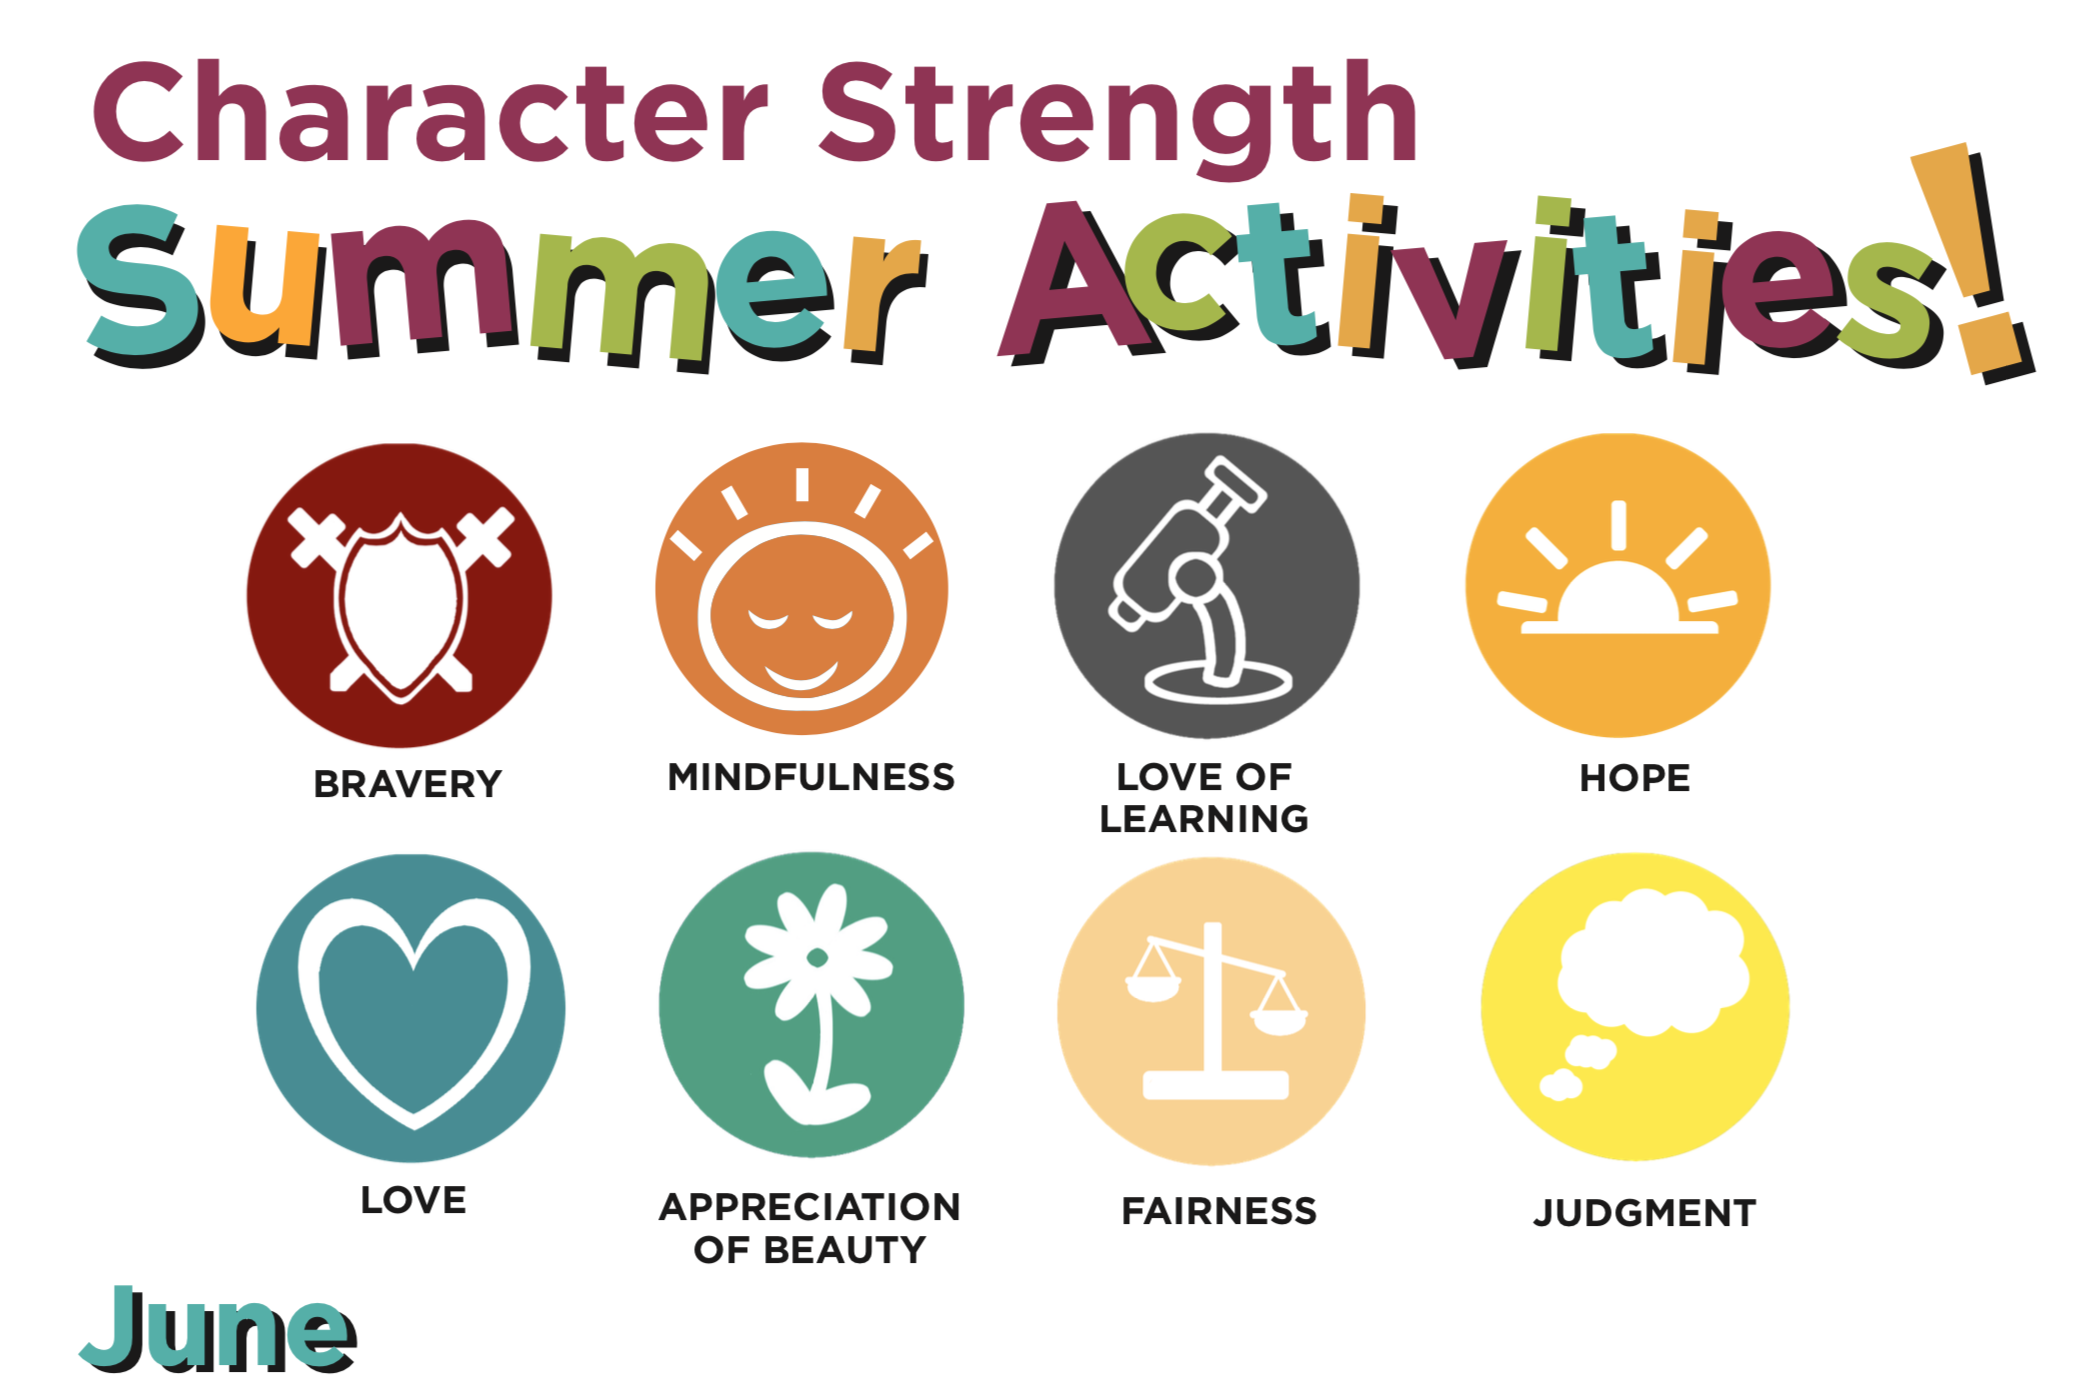 Character Strength Summer Activities for June!